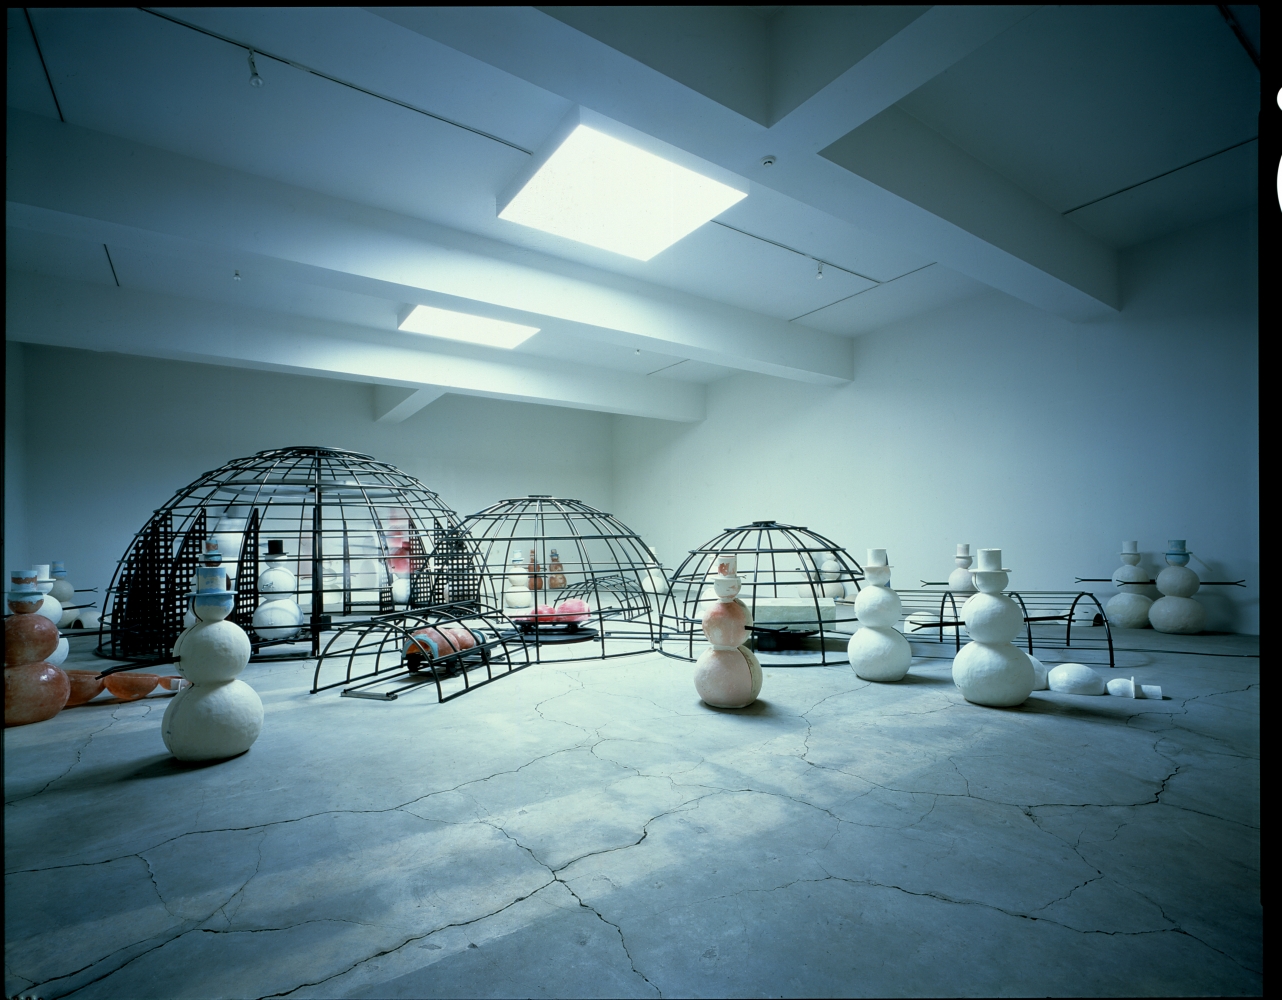 Dennis Oppenheim, Snowman Factory, 1996